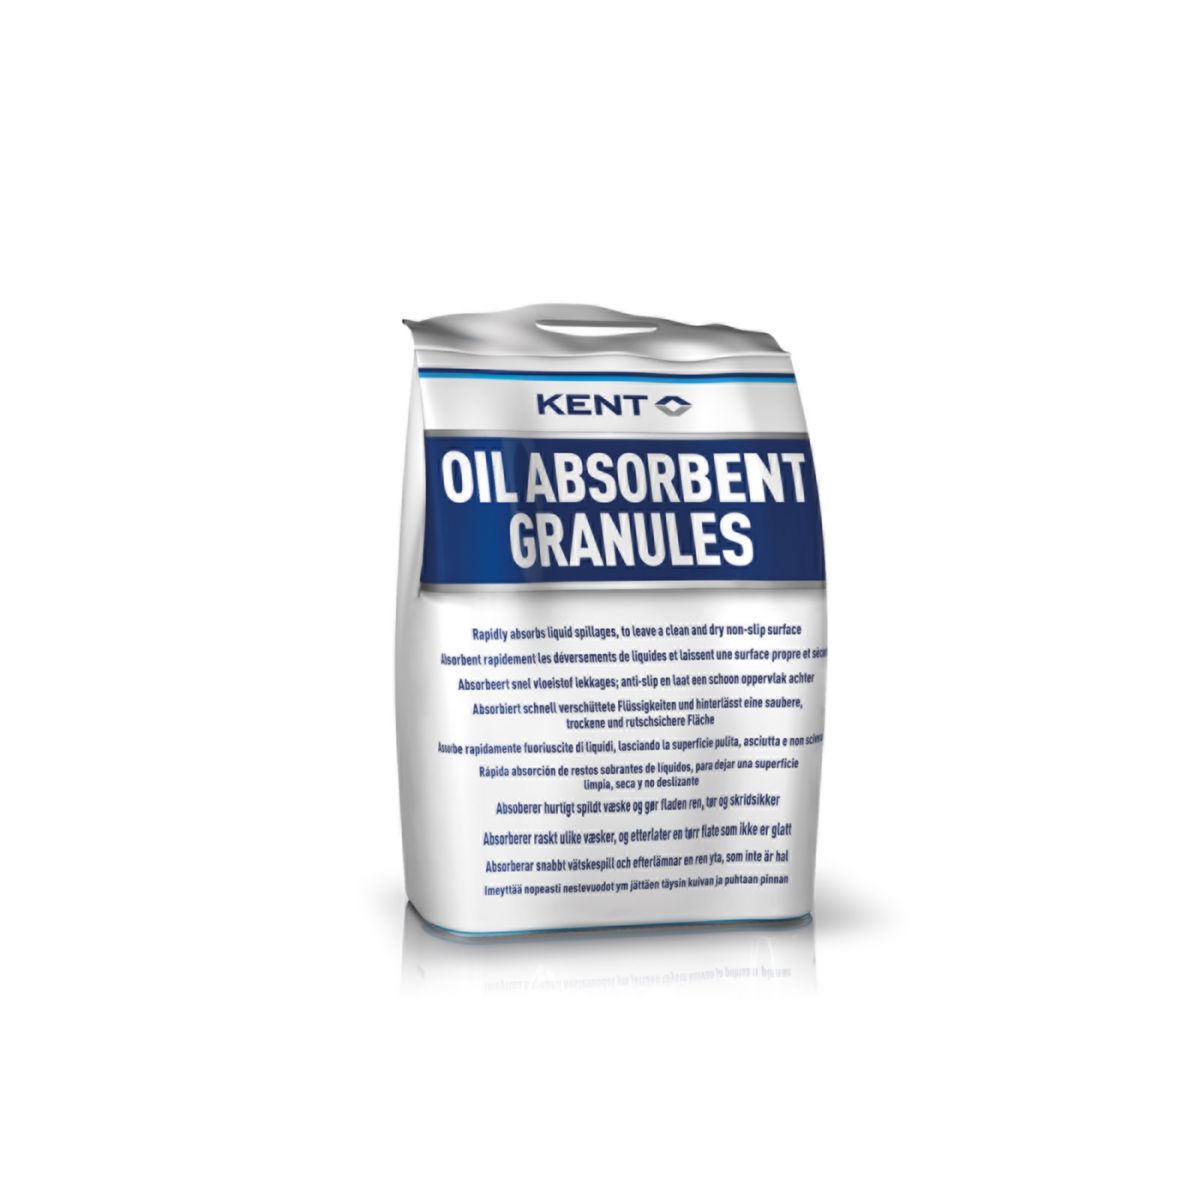 Oil Absorbent Granules